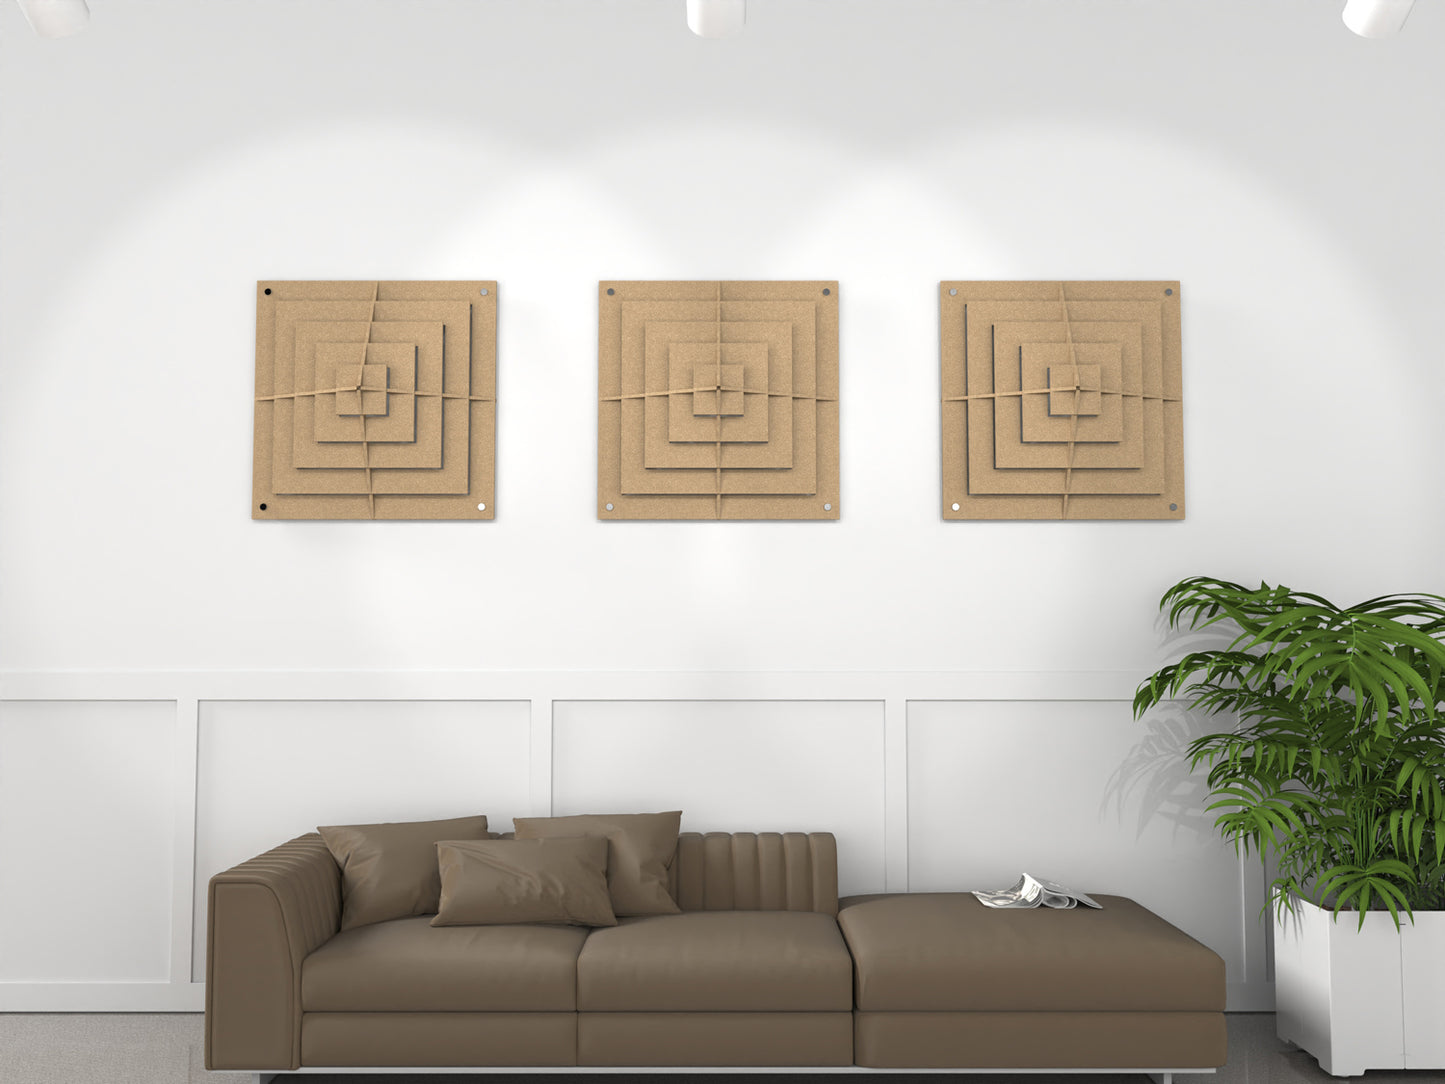 Acoustic felt 3d wall panels - square diffuser - room view render